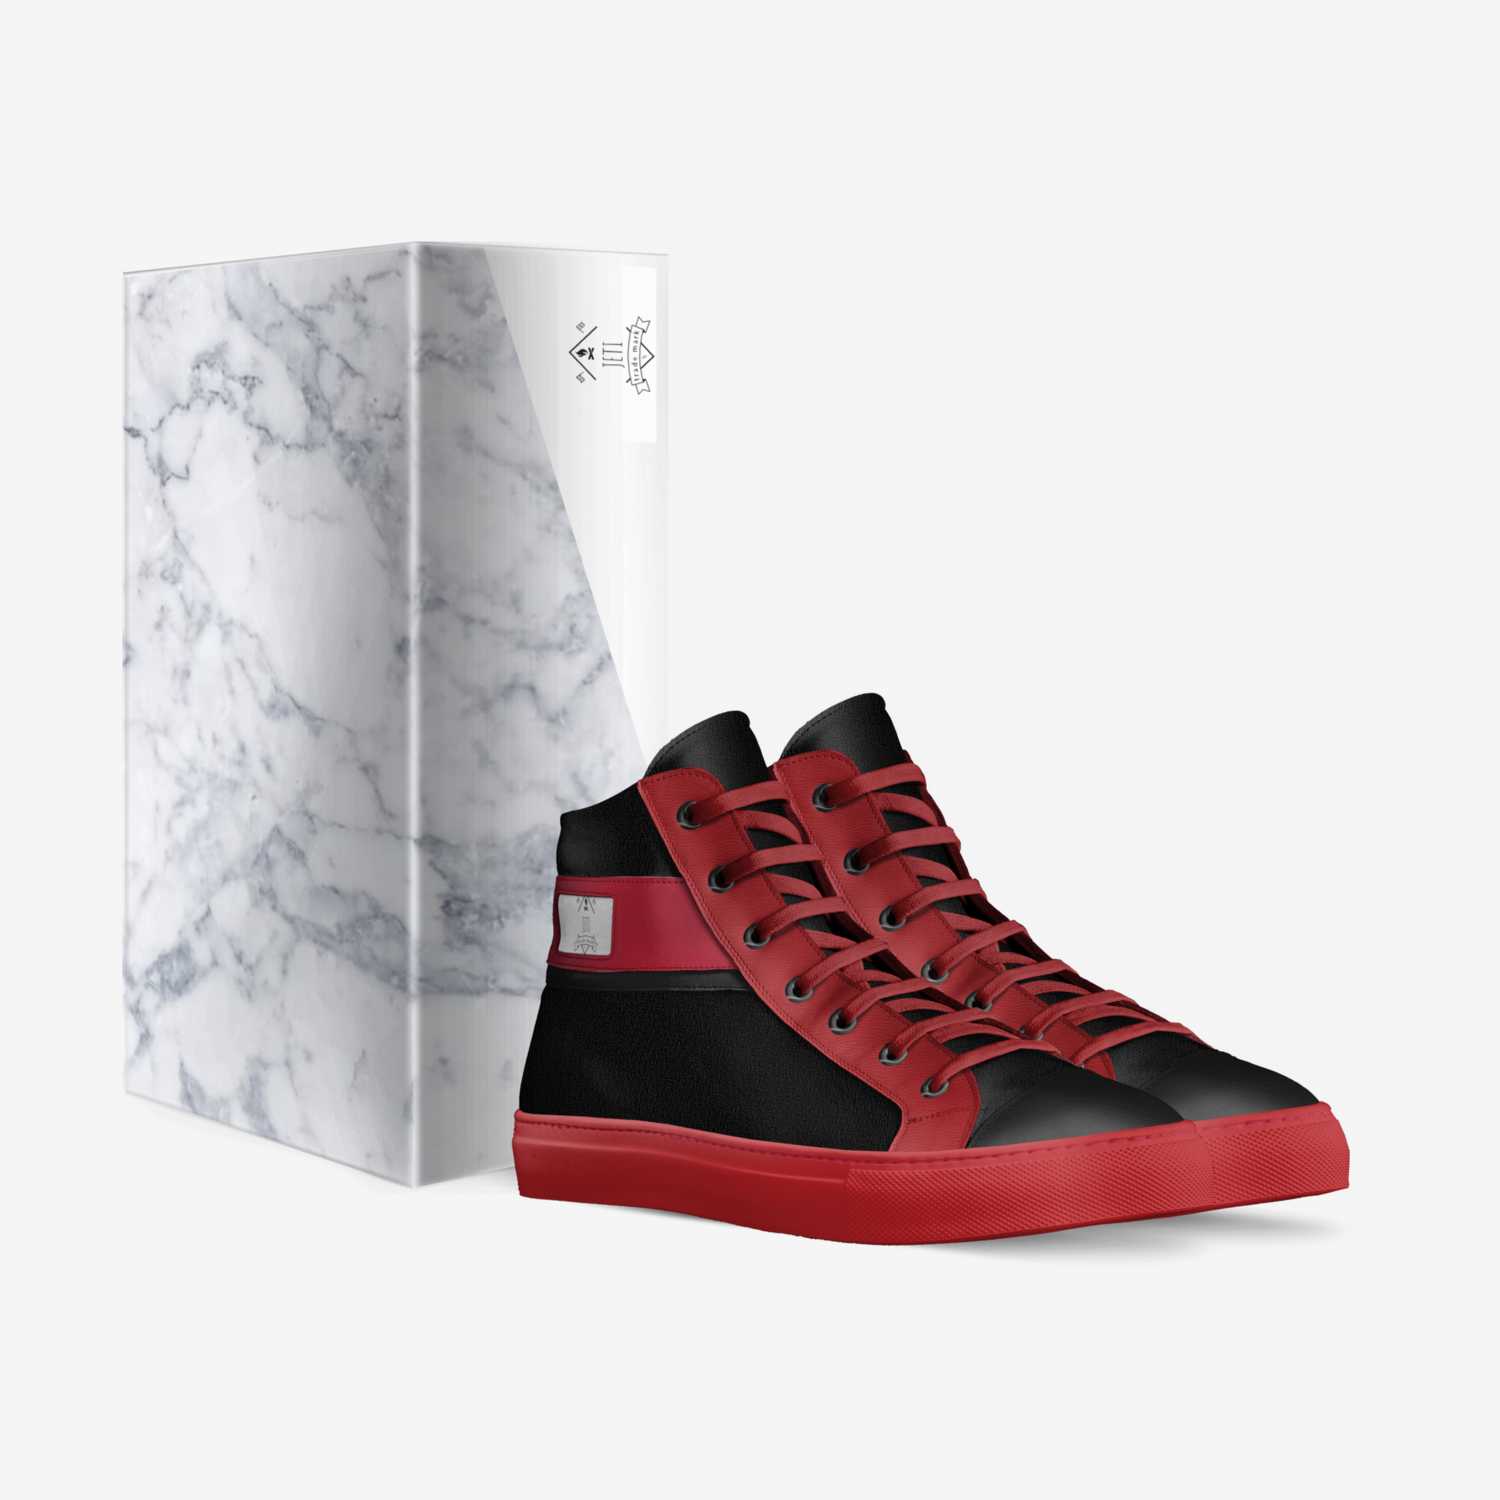 Loyal custom made in Italy shoes by Ilgaz Koc | Box view